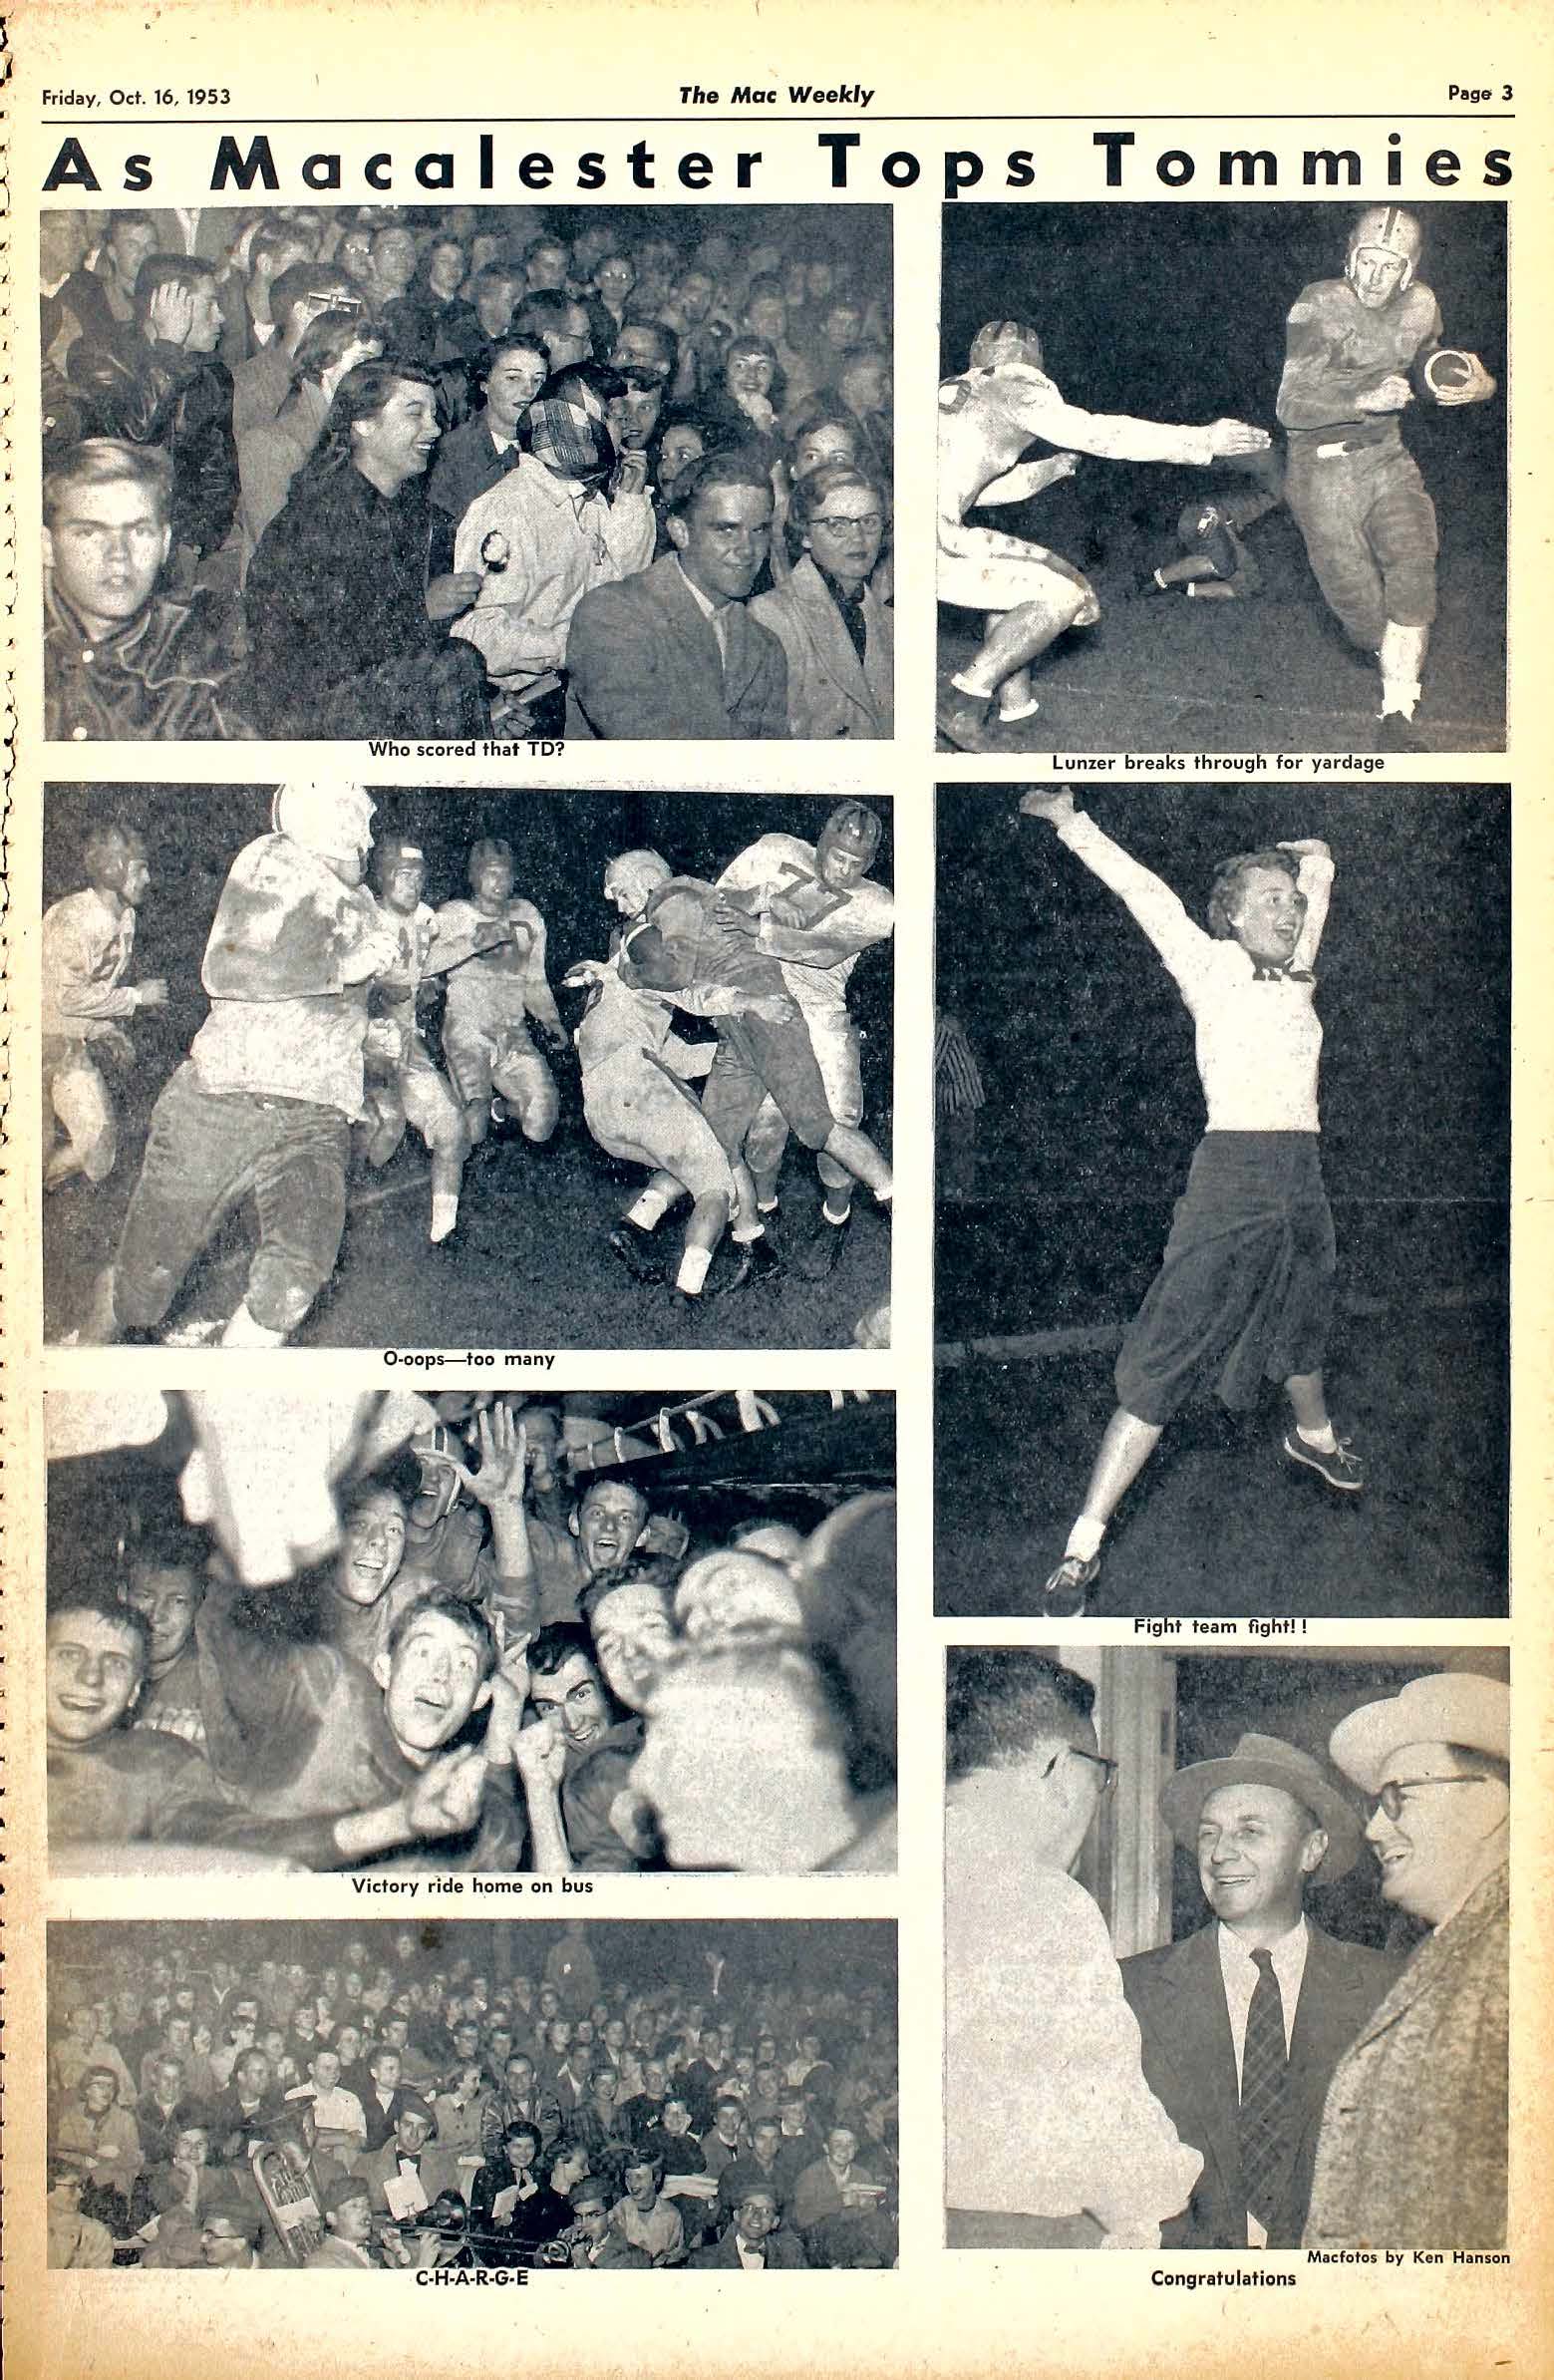 The Mac Weekly, October 16, 1953. Football.